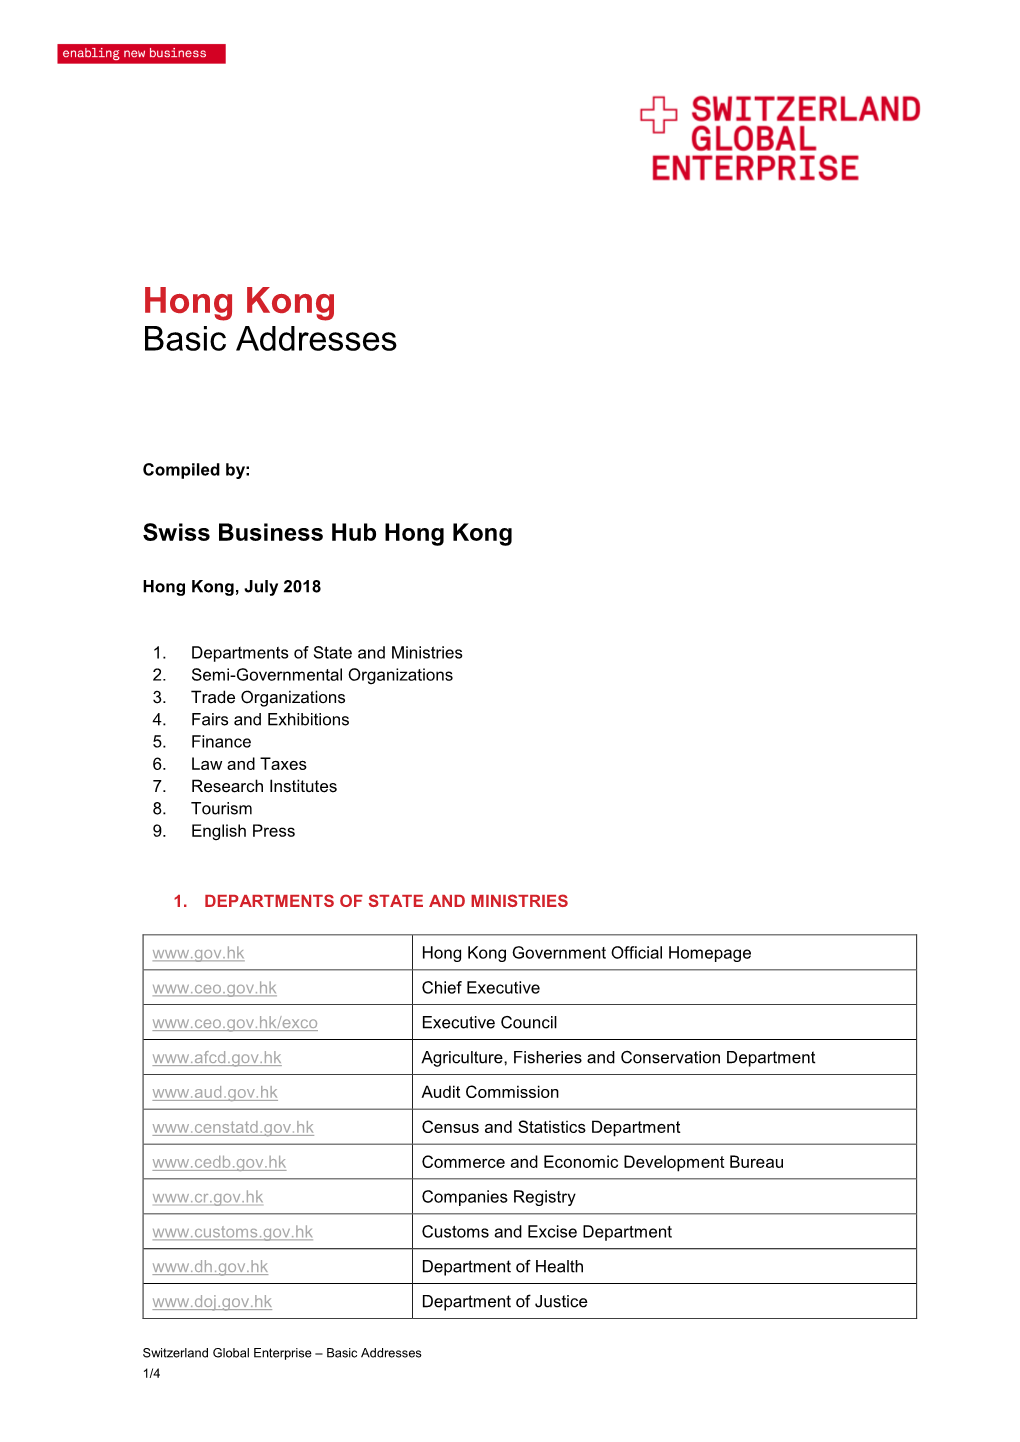 Hong Kong Basic Addresses